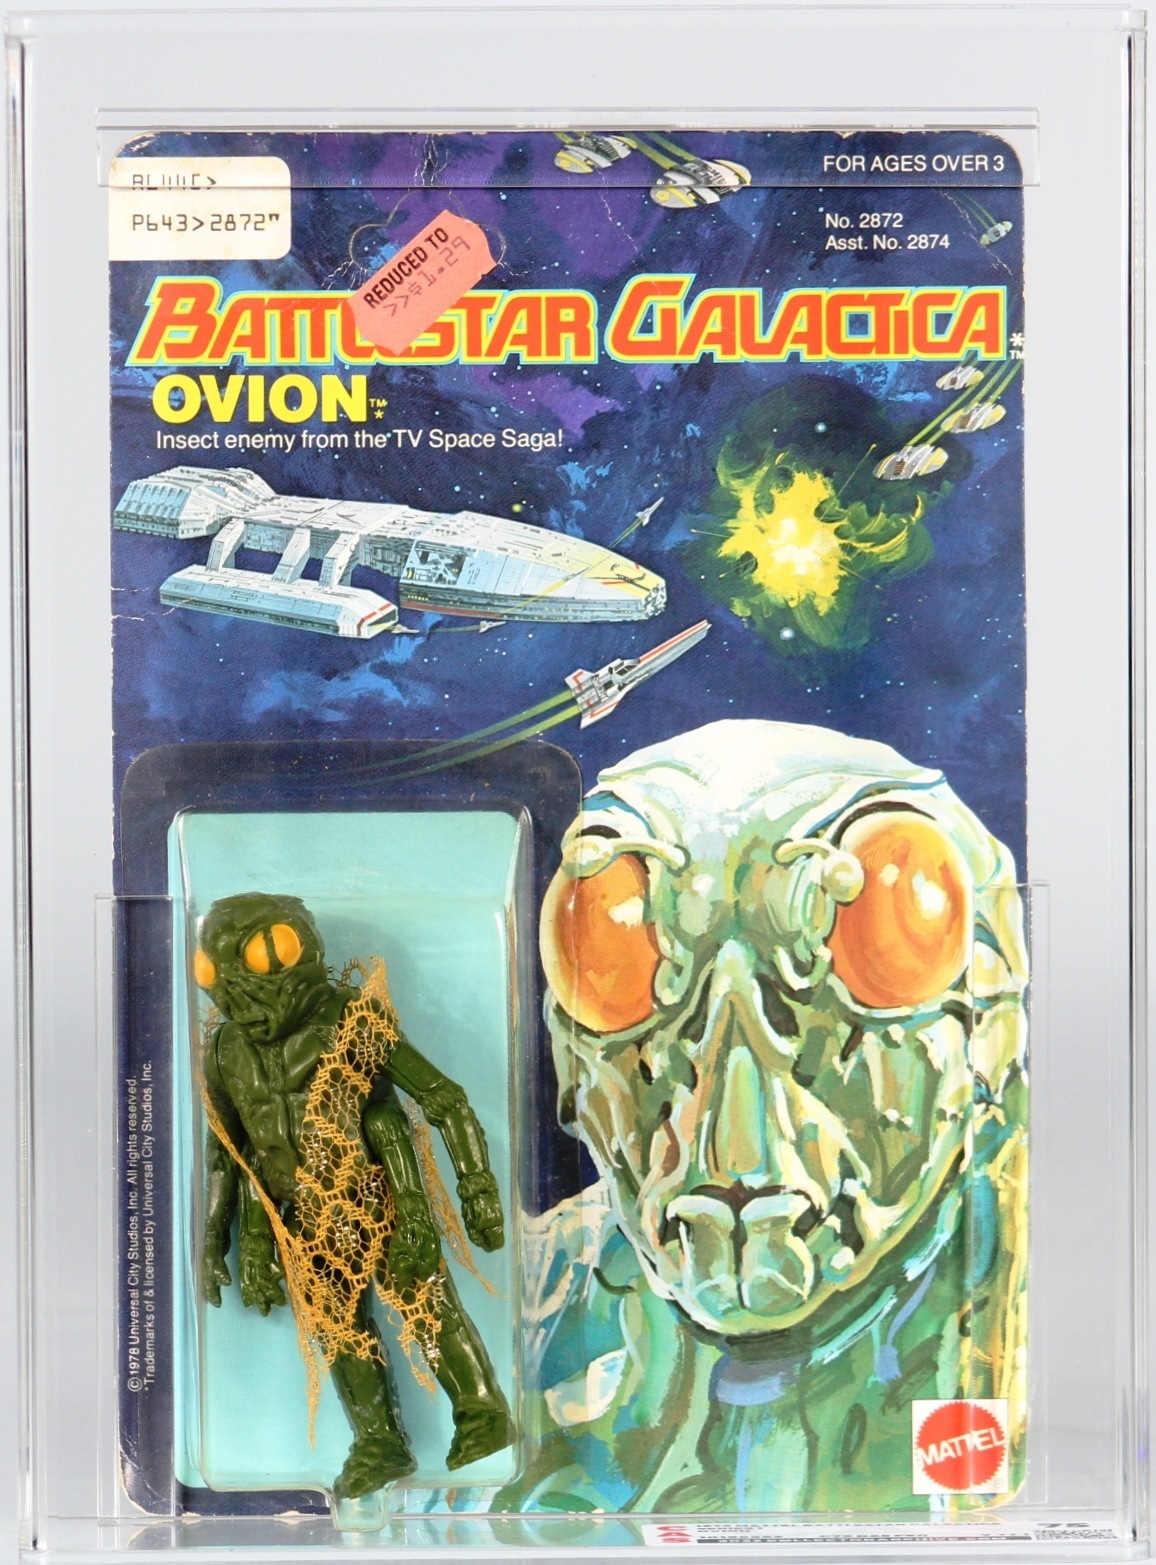 1978 Battlestar Galactica Carded Action Figure - Ovion